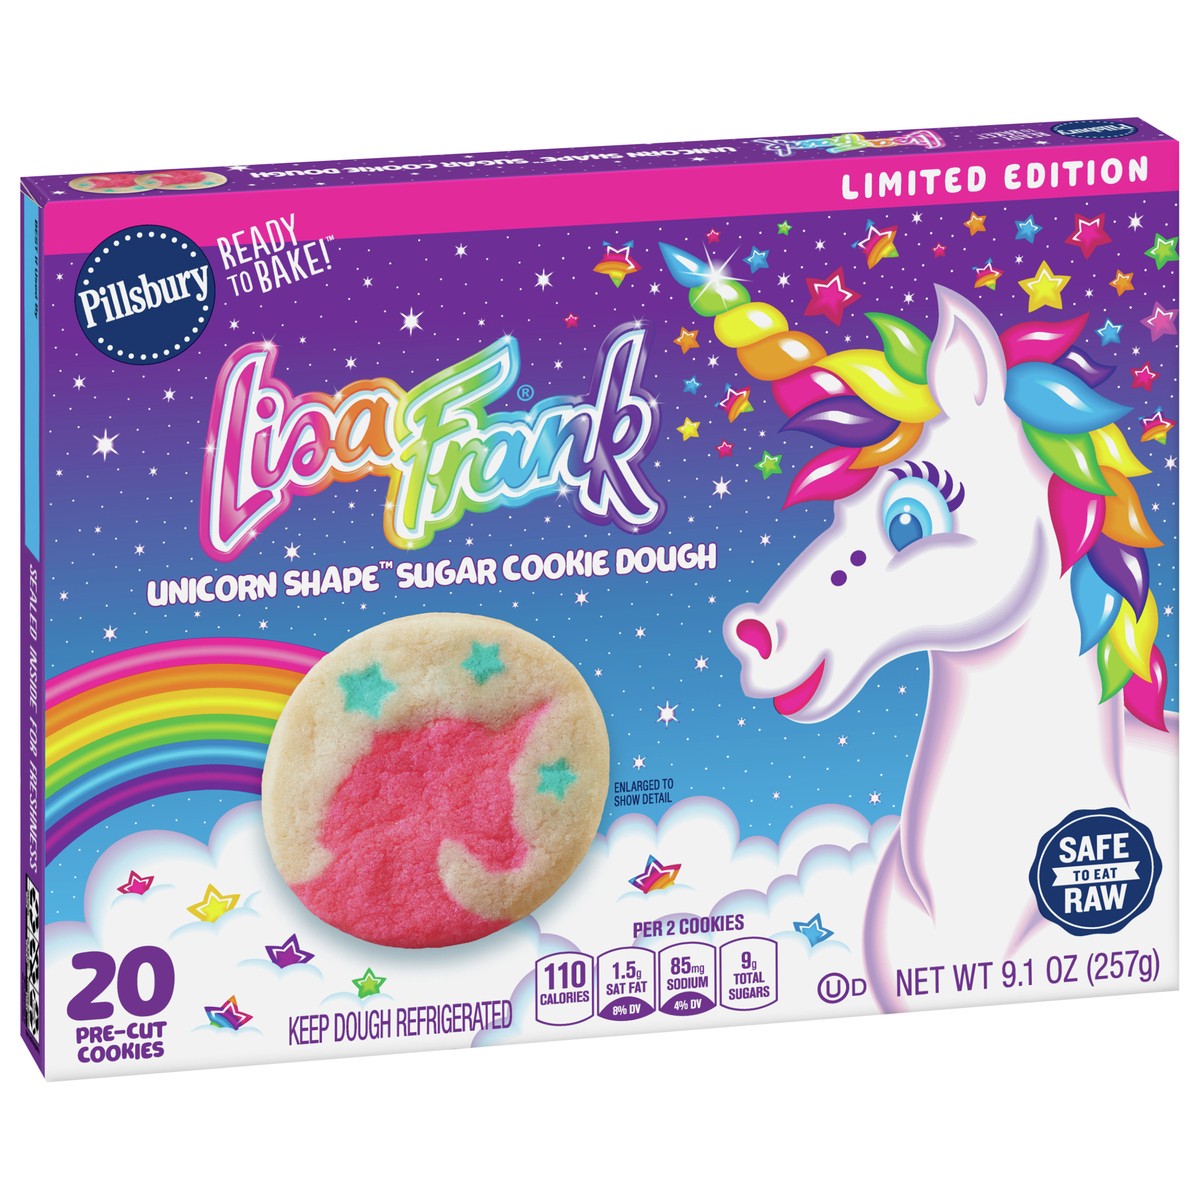 slide 9 of 9, Pillsbury Ready to Bake Lisa Frank Unicorn Shape Sugar Cookie Dough, Limited Edition, 9.1 oz, 20 ct